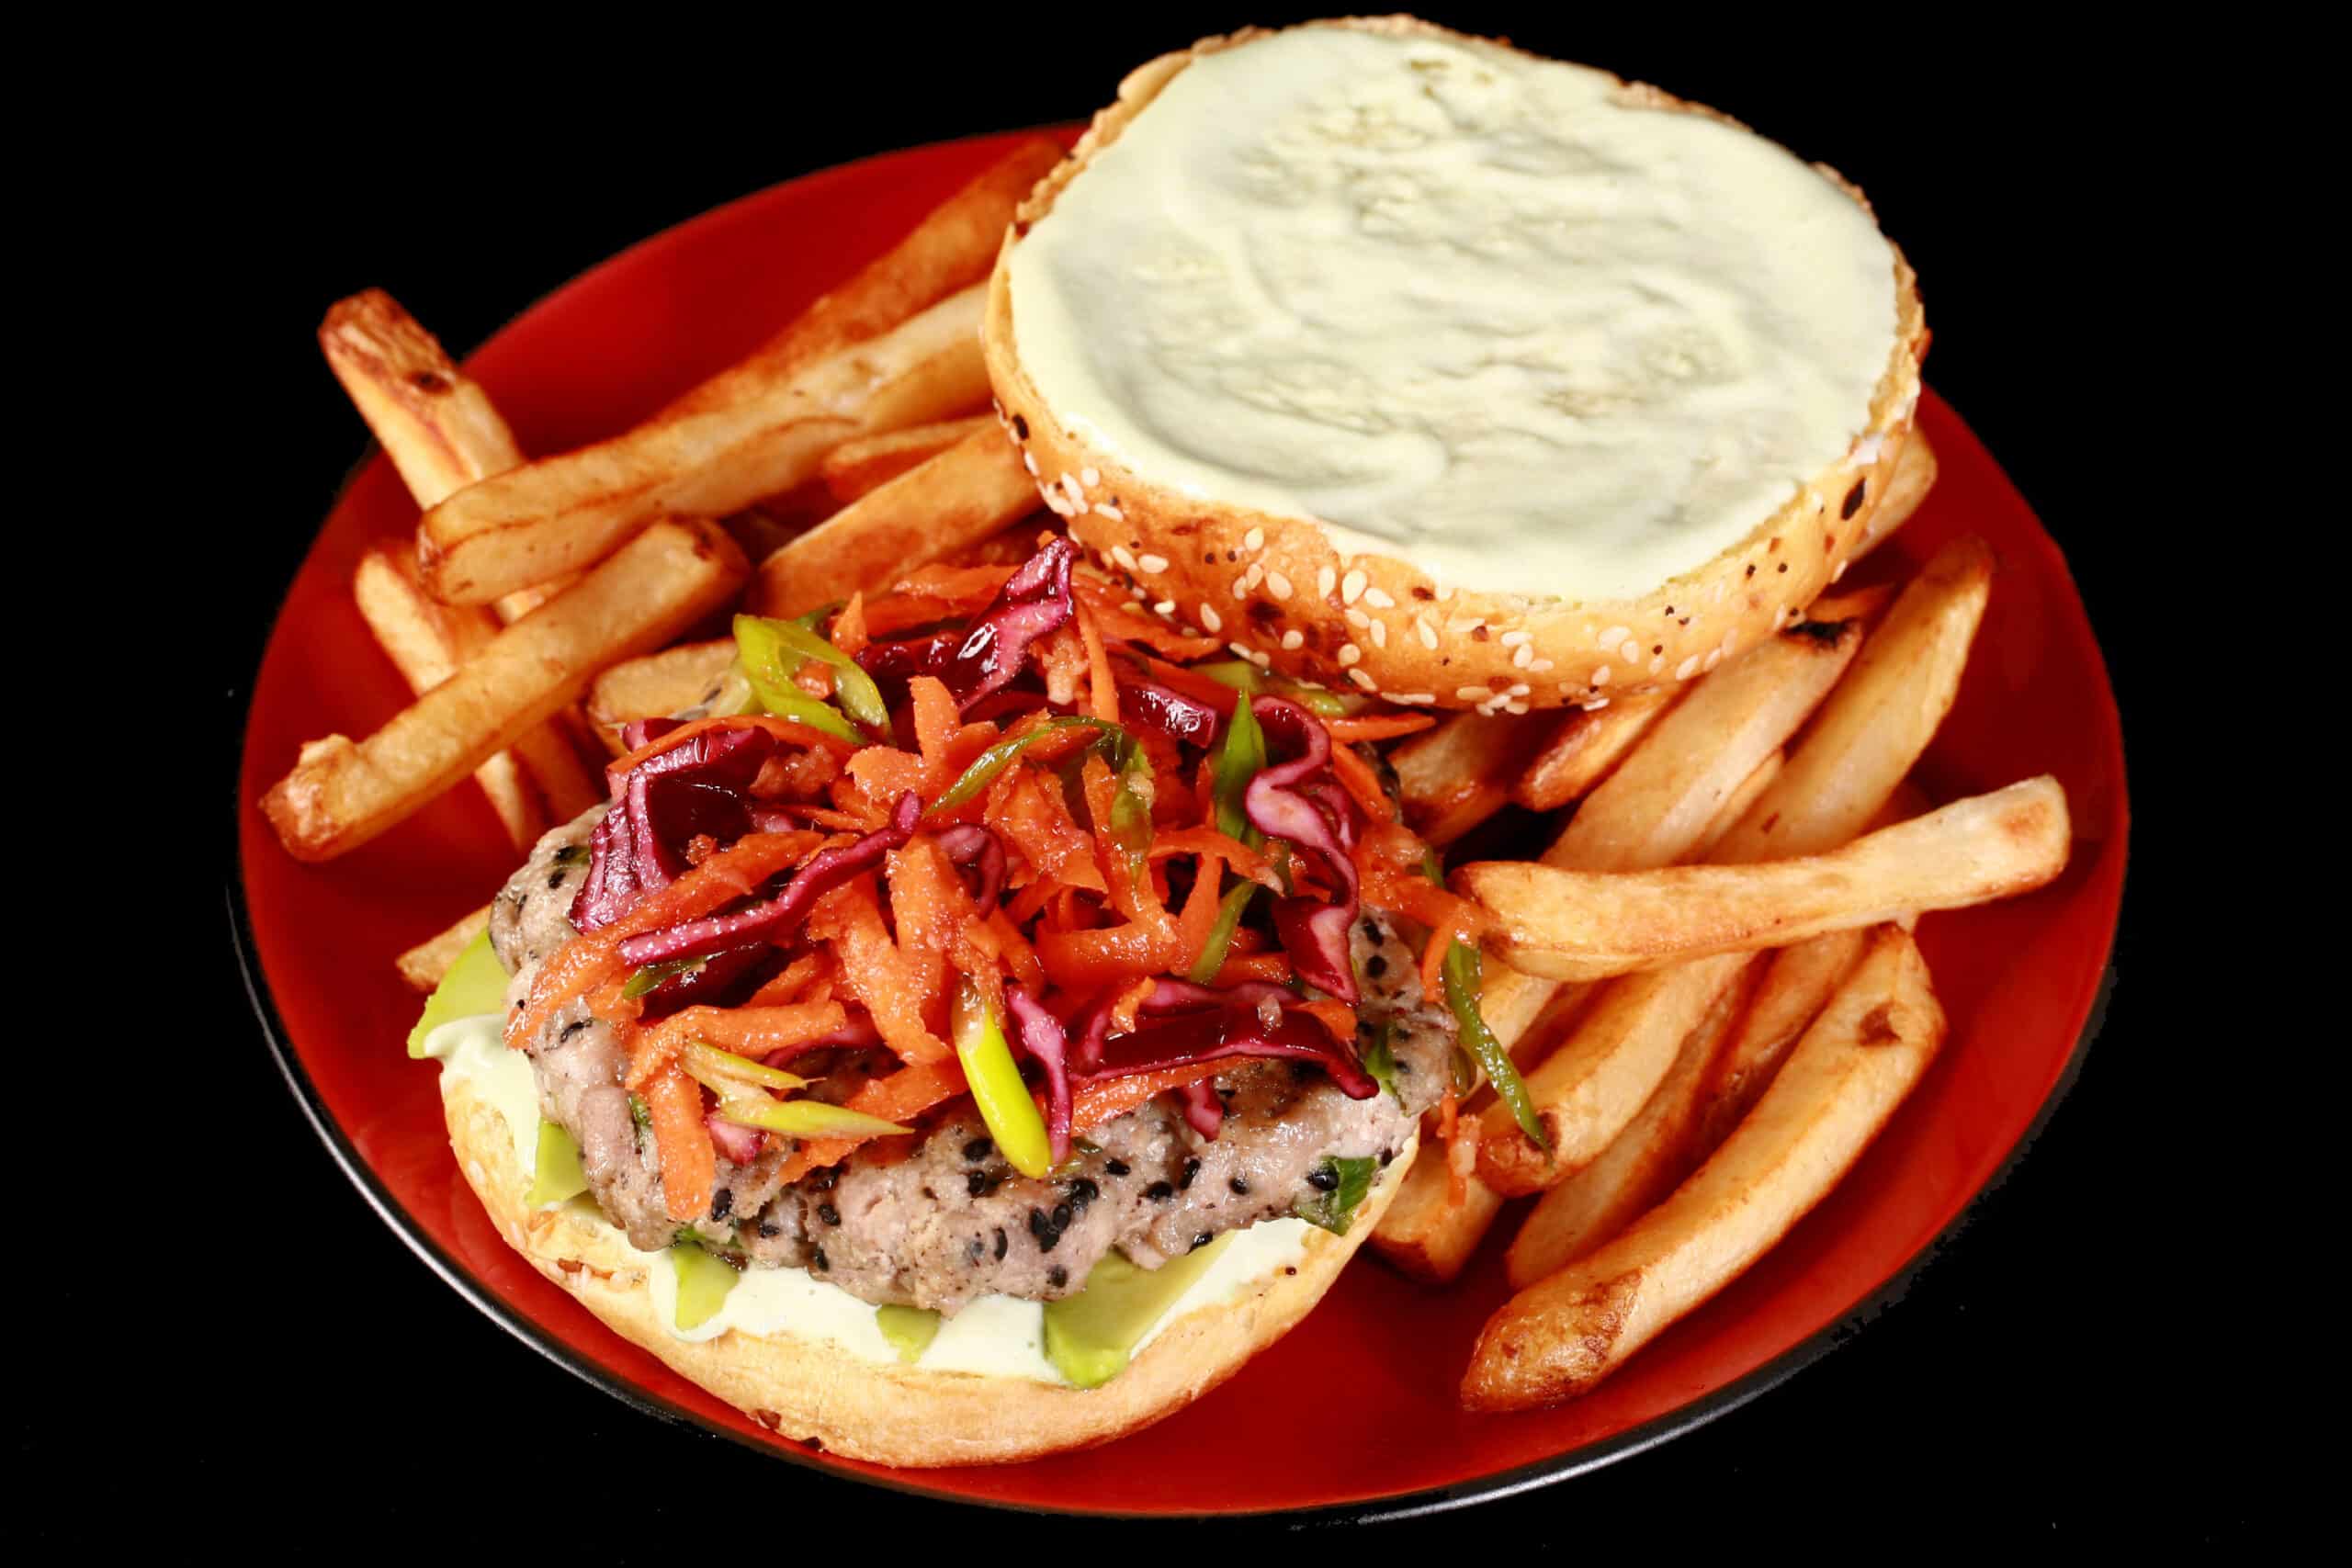 An ahi tuna burger with ginger slaw and wasabi mayo.